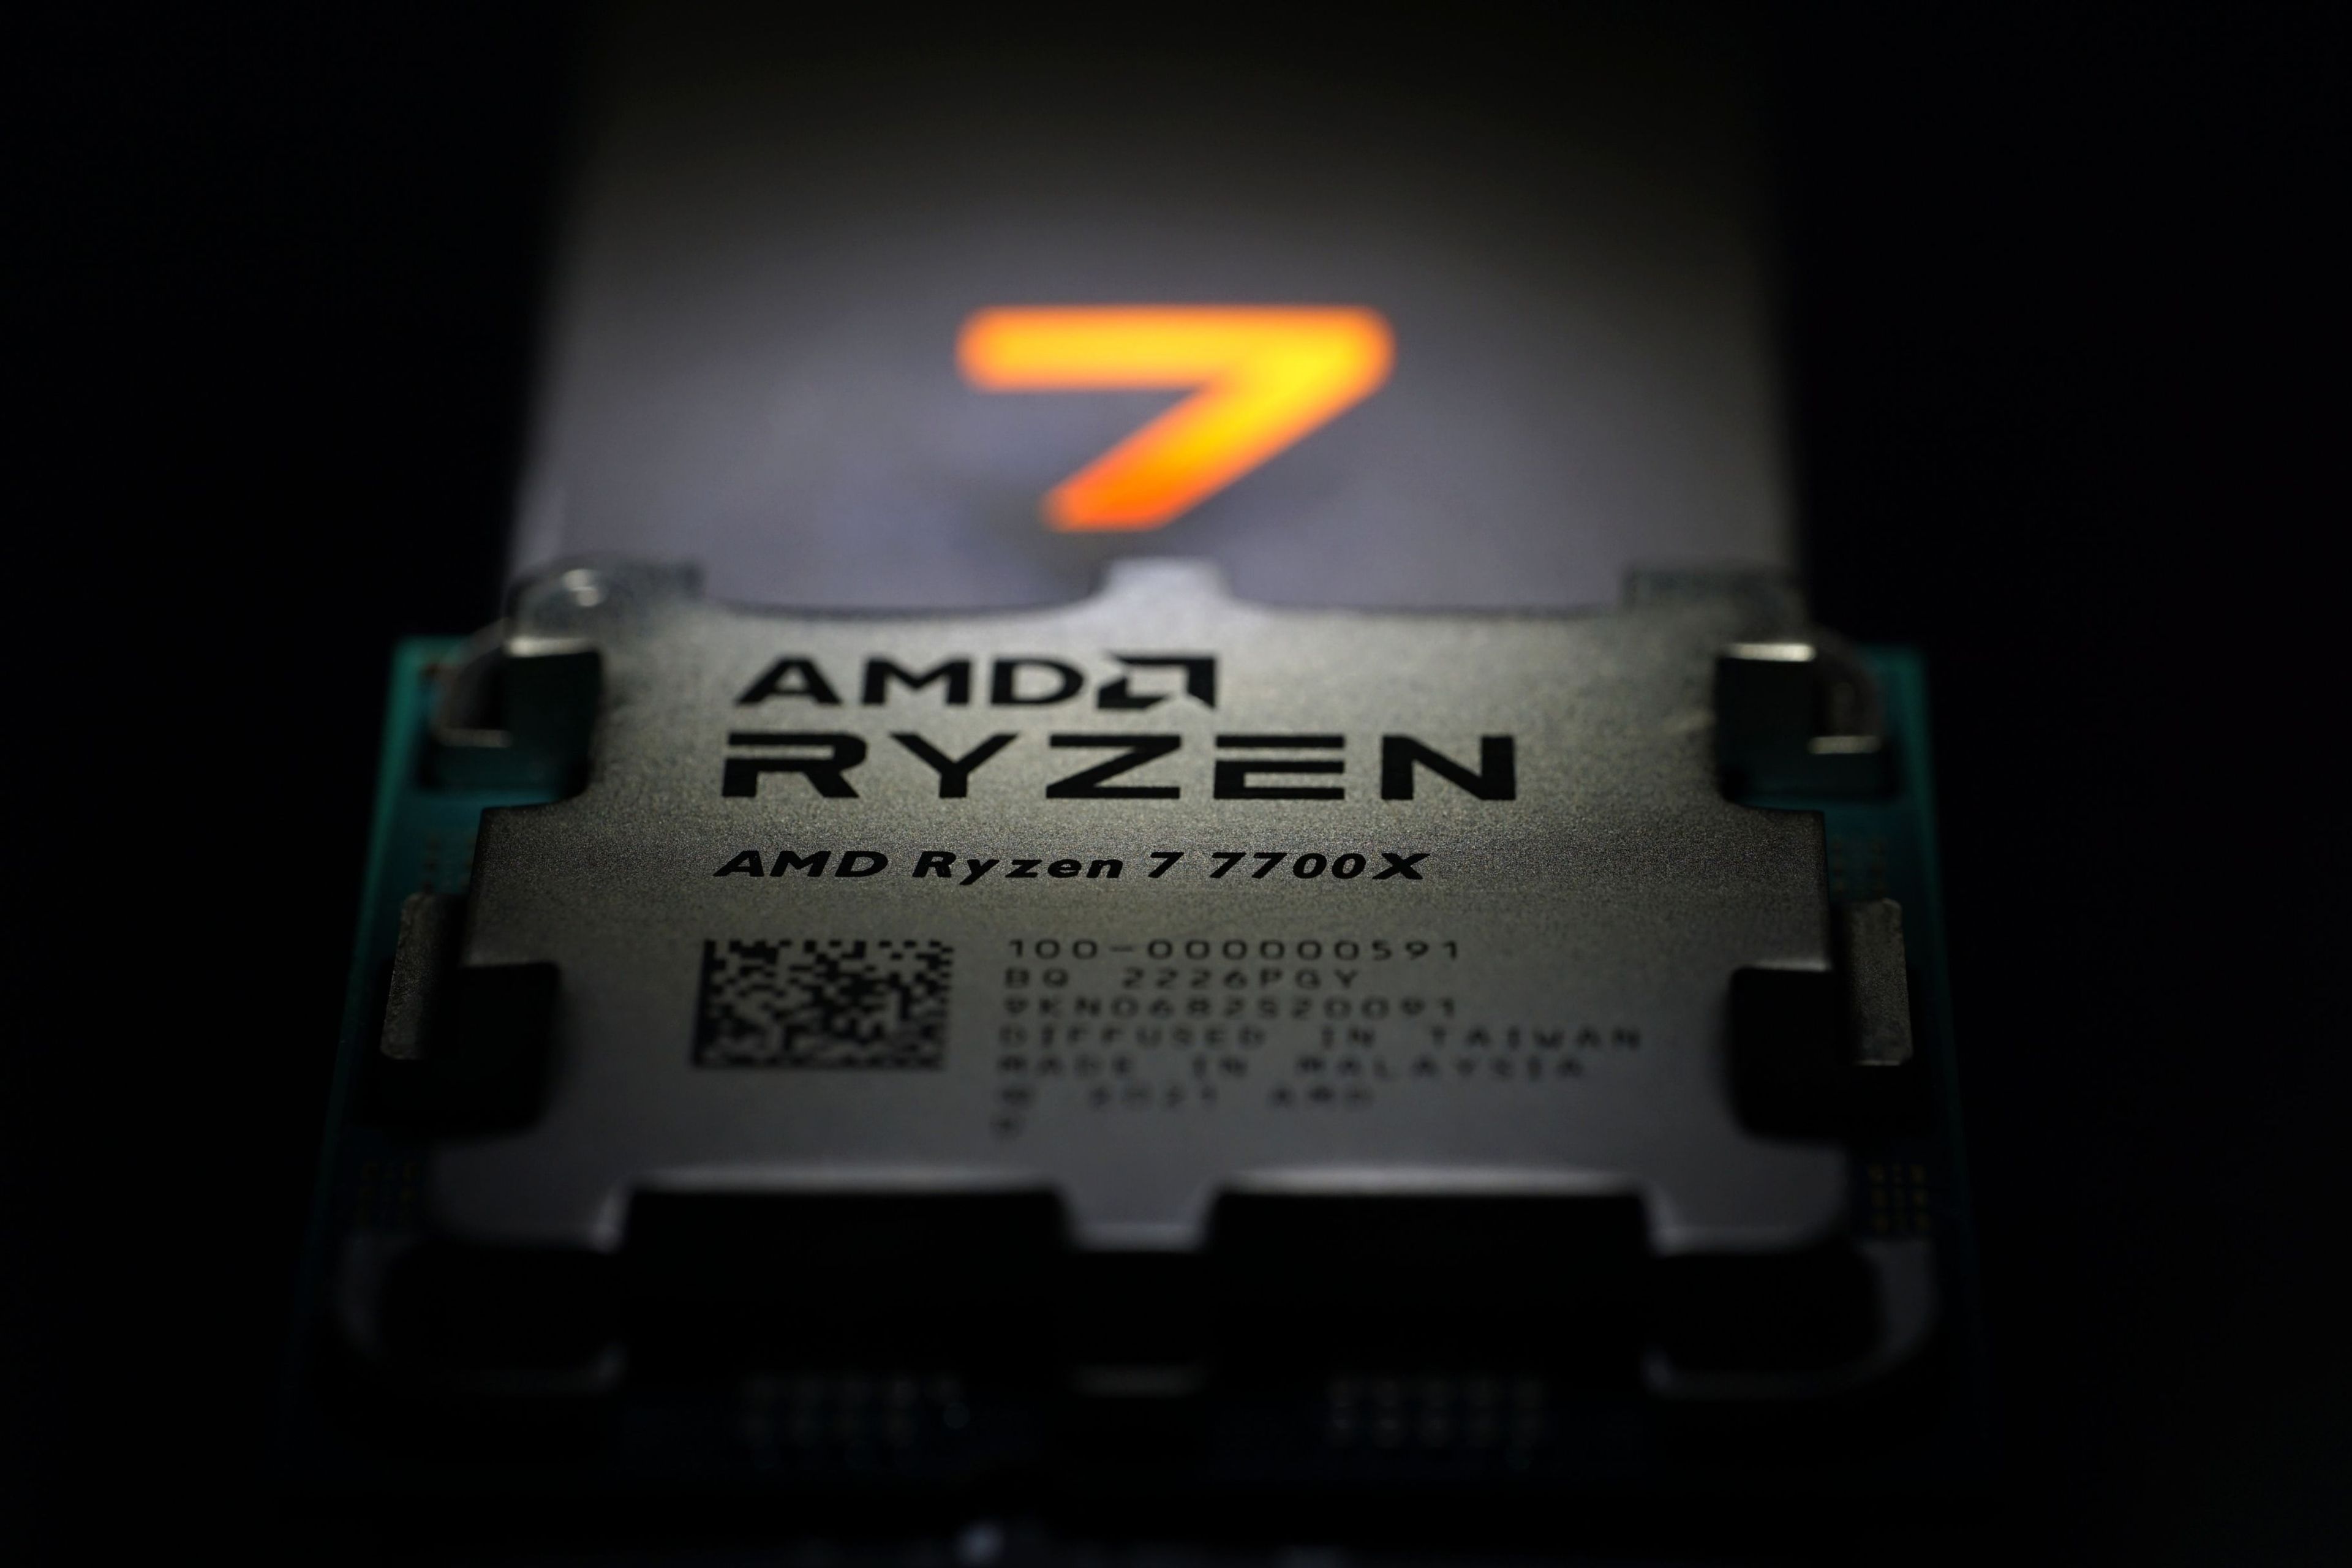 Amd Ryzen 7 7700X Desktop Processor